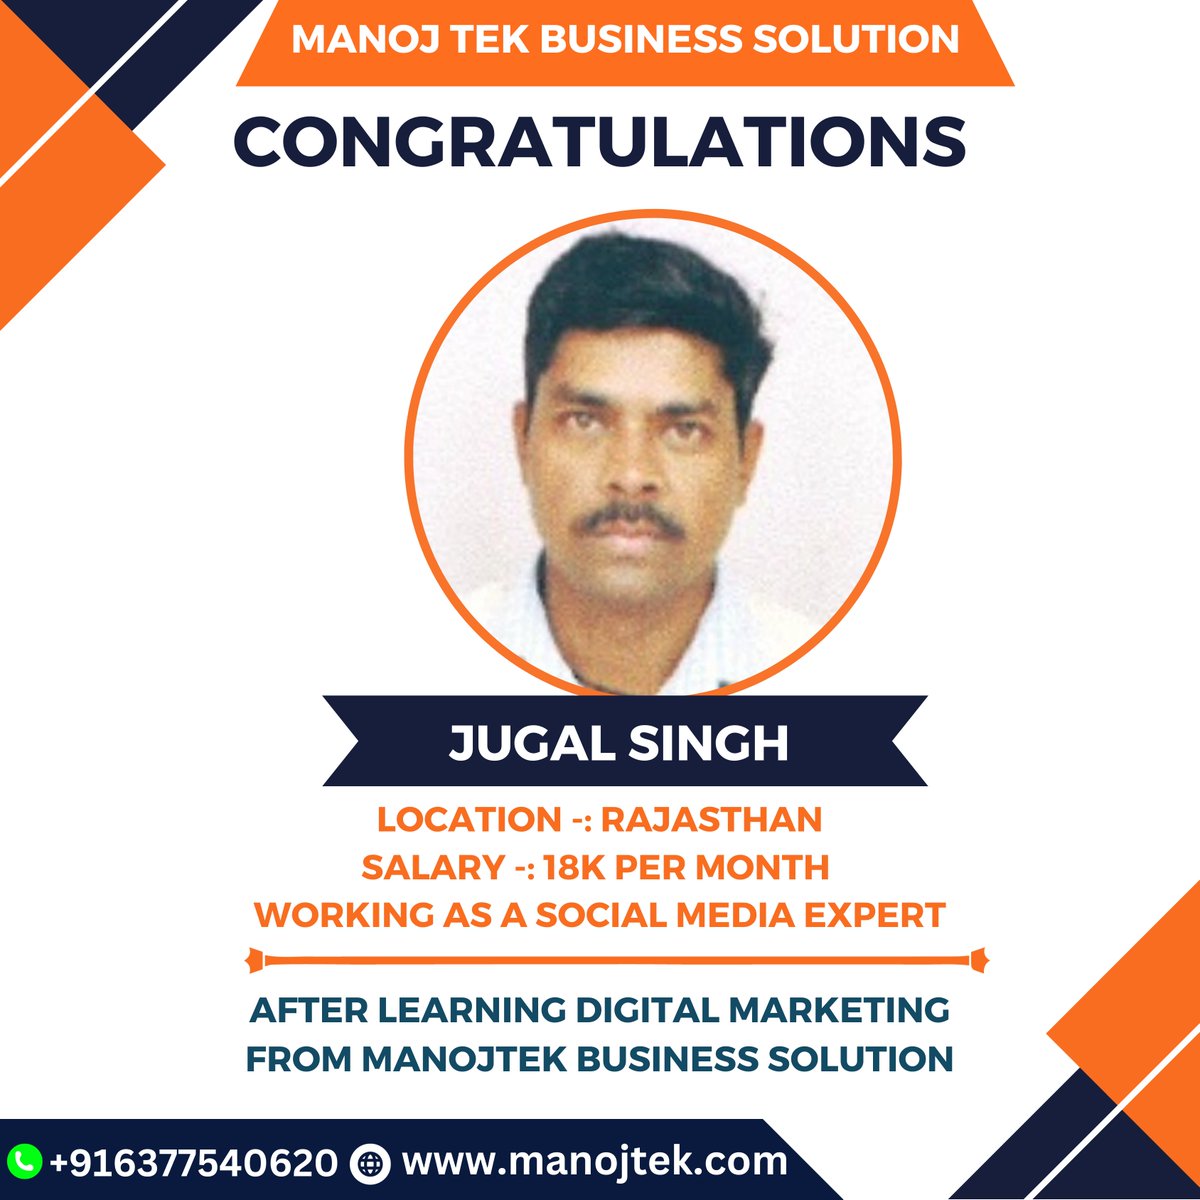 'Congratulations to Jugal Singh from Rajasthan for mastering the social media realm  #SocialMediaMaven #RajasthanExpert #CareerMilestone #DigitalTrailblazer #SMMastery #SuccessStory #JobGoals #SkillMastery #WorkHardAchieveMore #CongratsJugal'